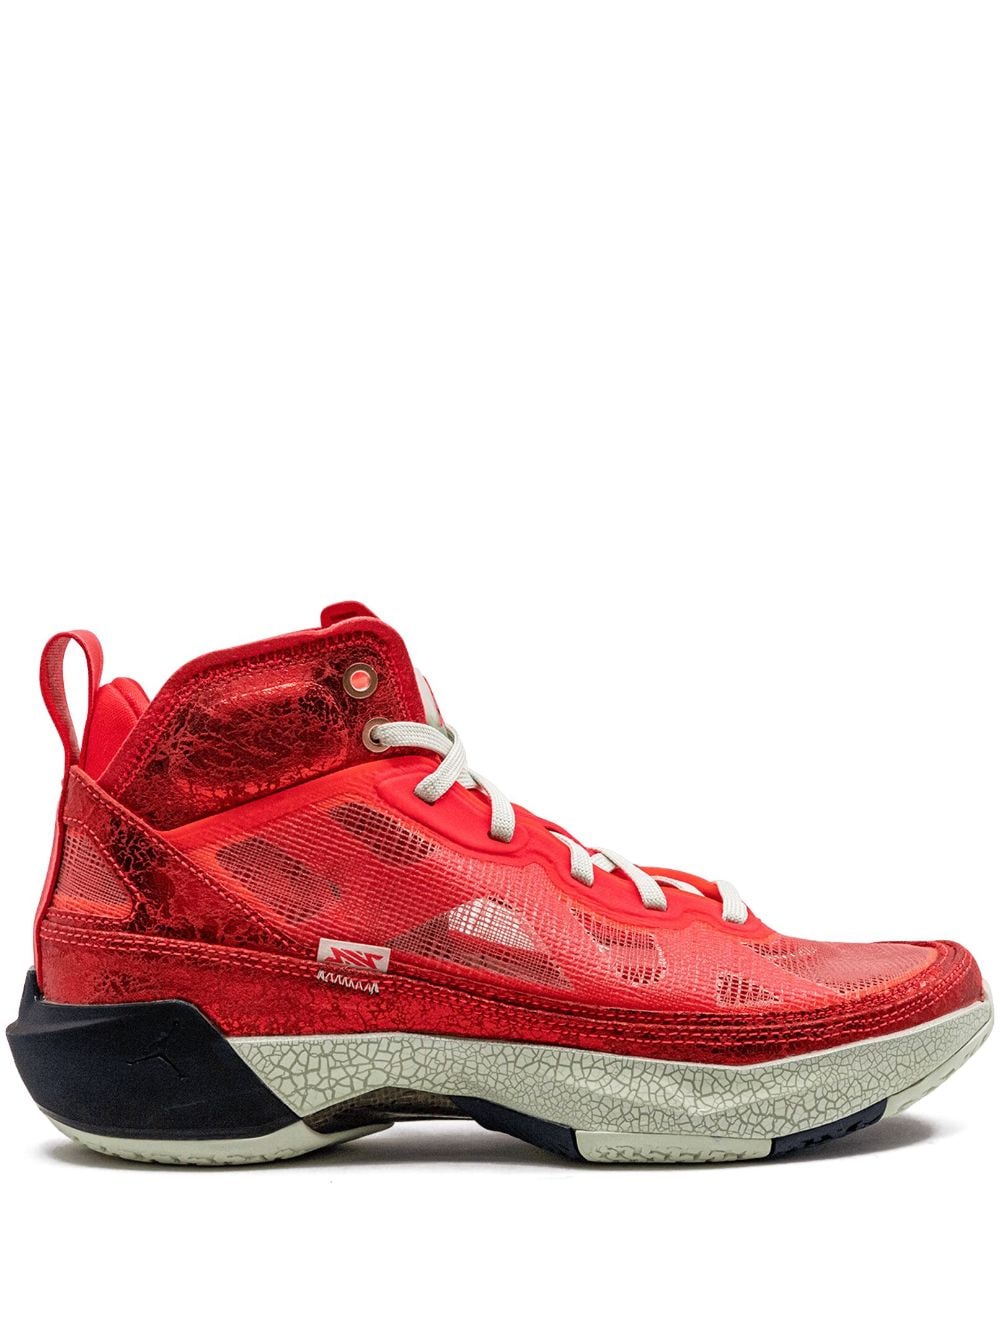 Jordan 37 High-top Sneakers In Red